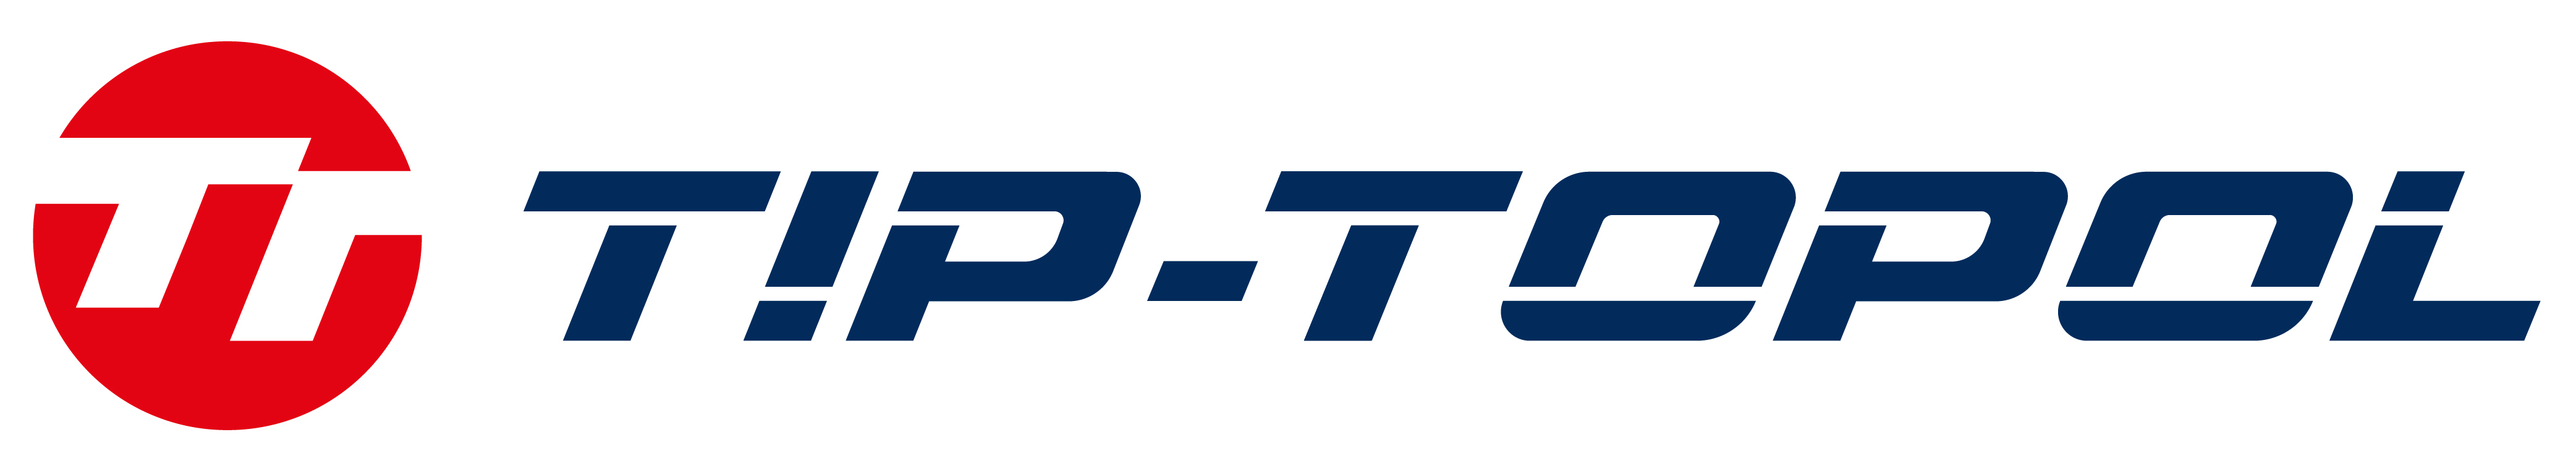 TIPTOPOL logo